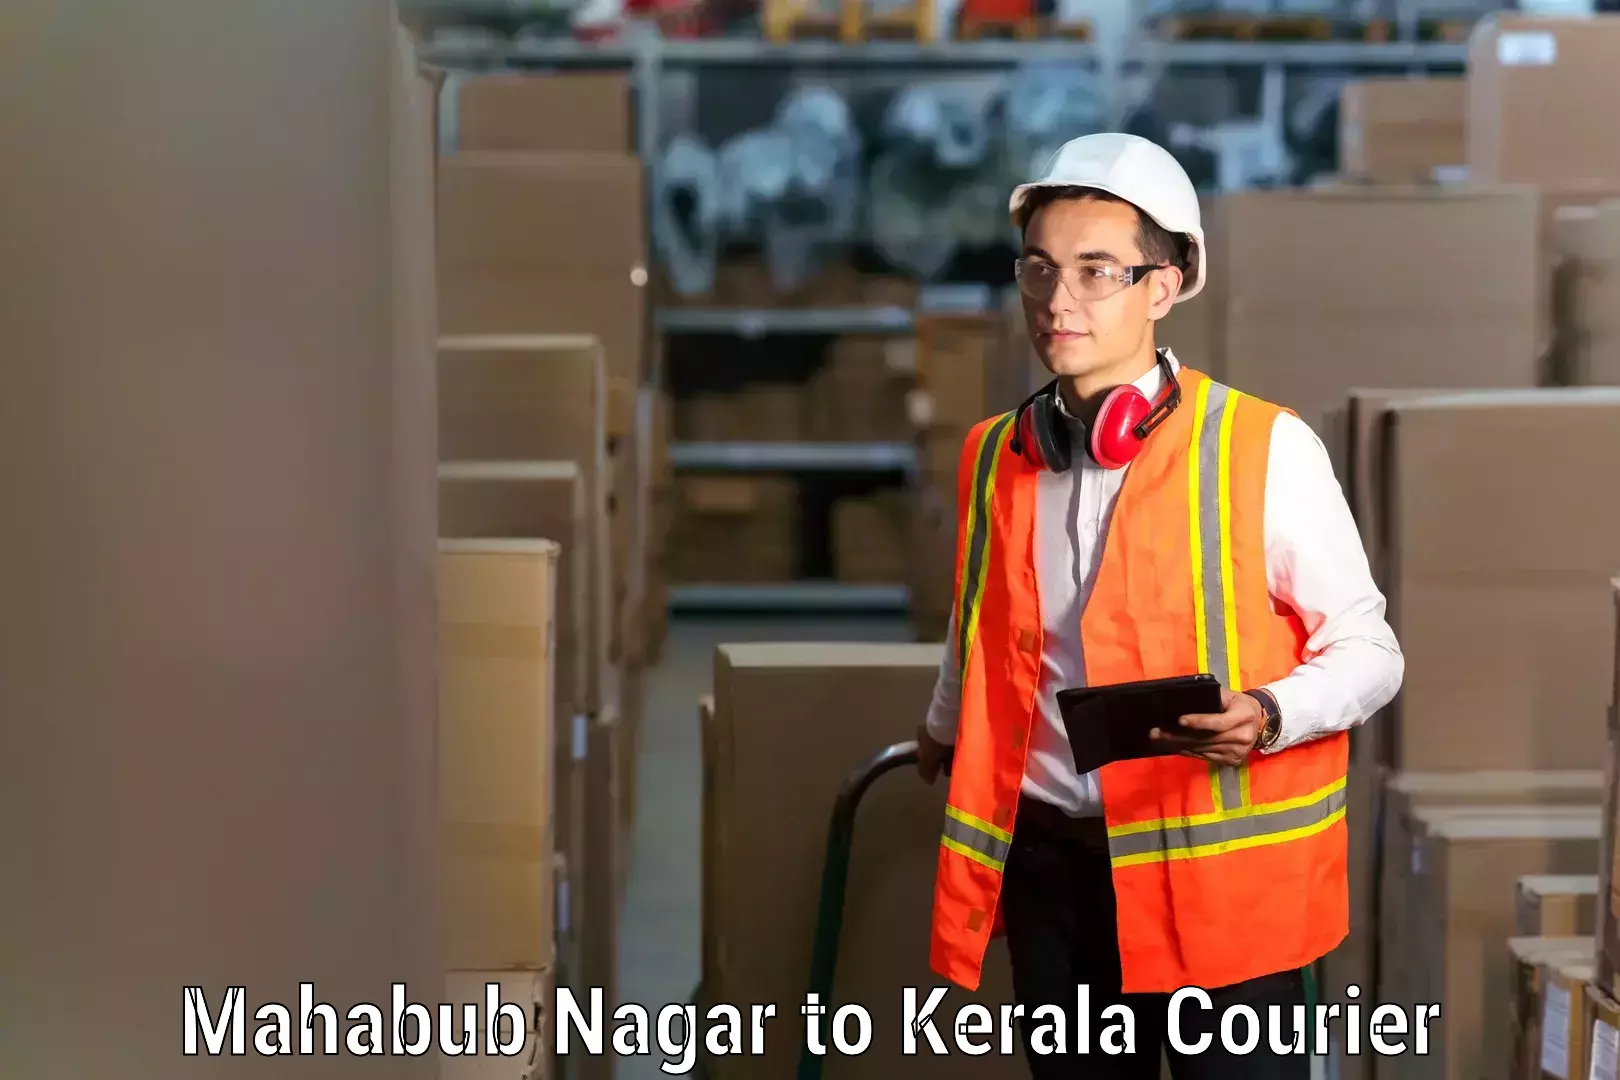 Furniture moving experts Mahabub Nagar to Kerala